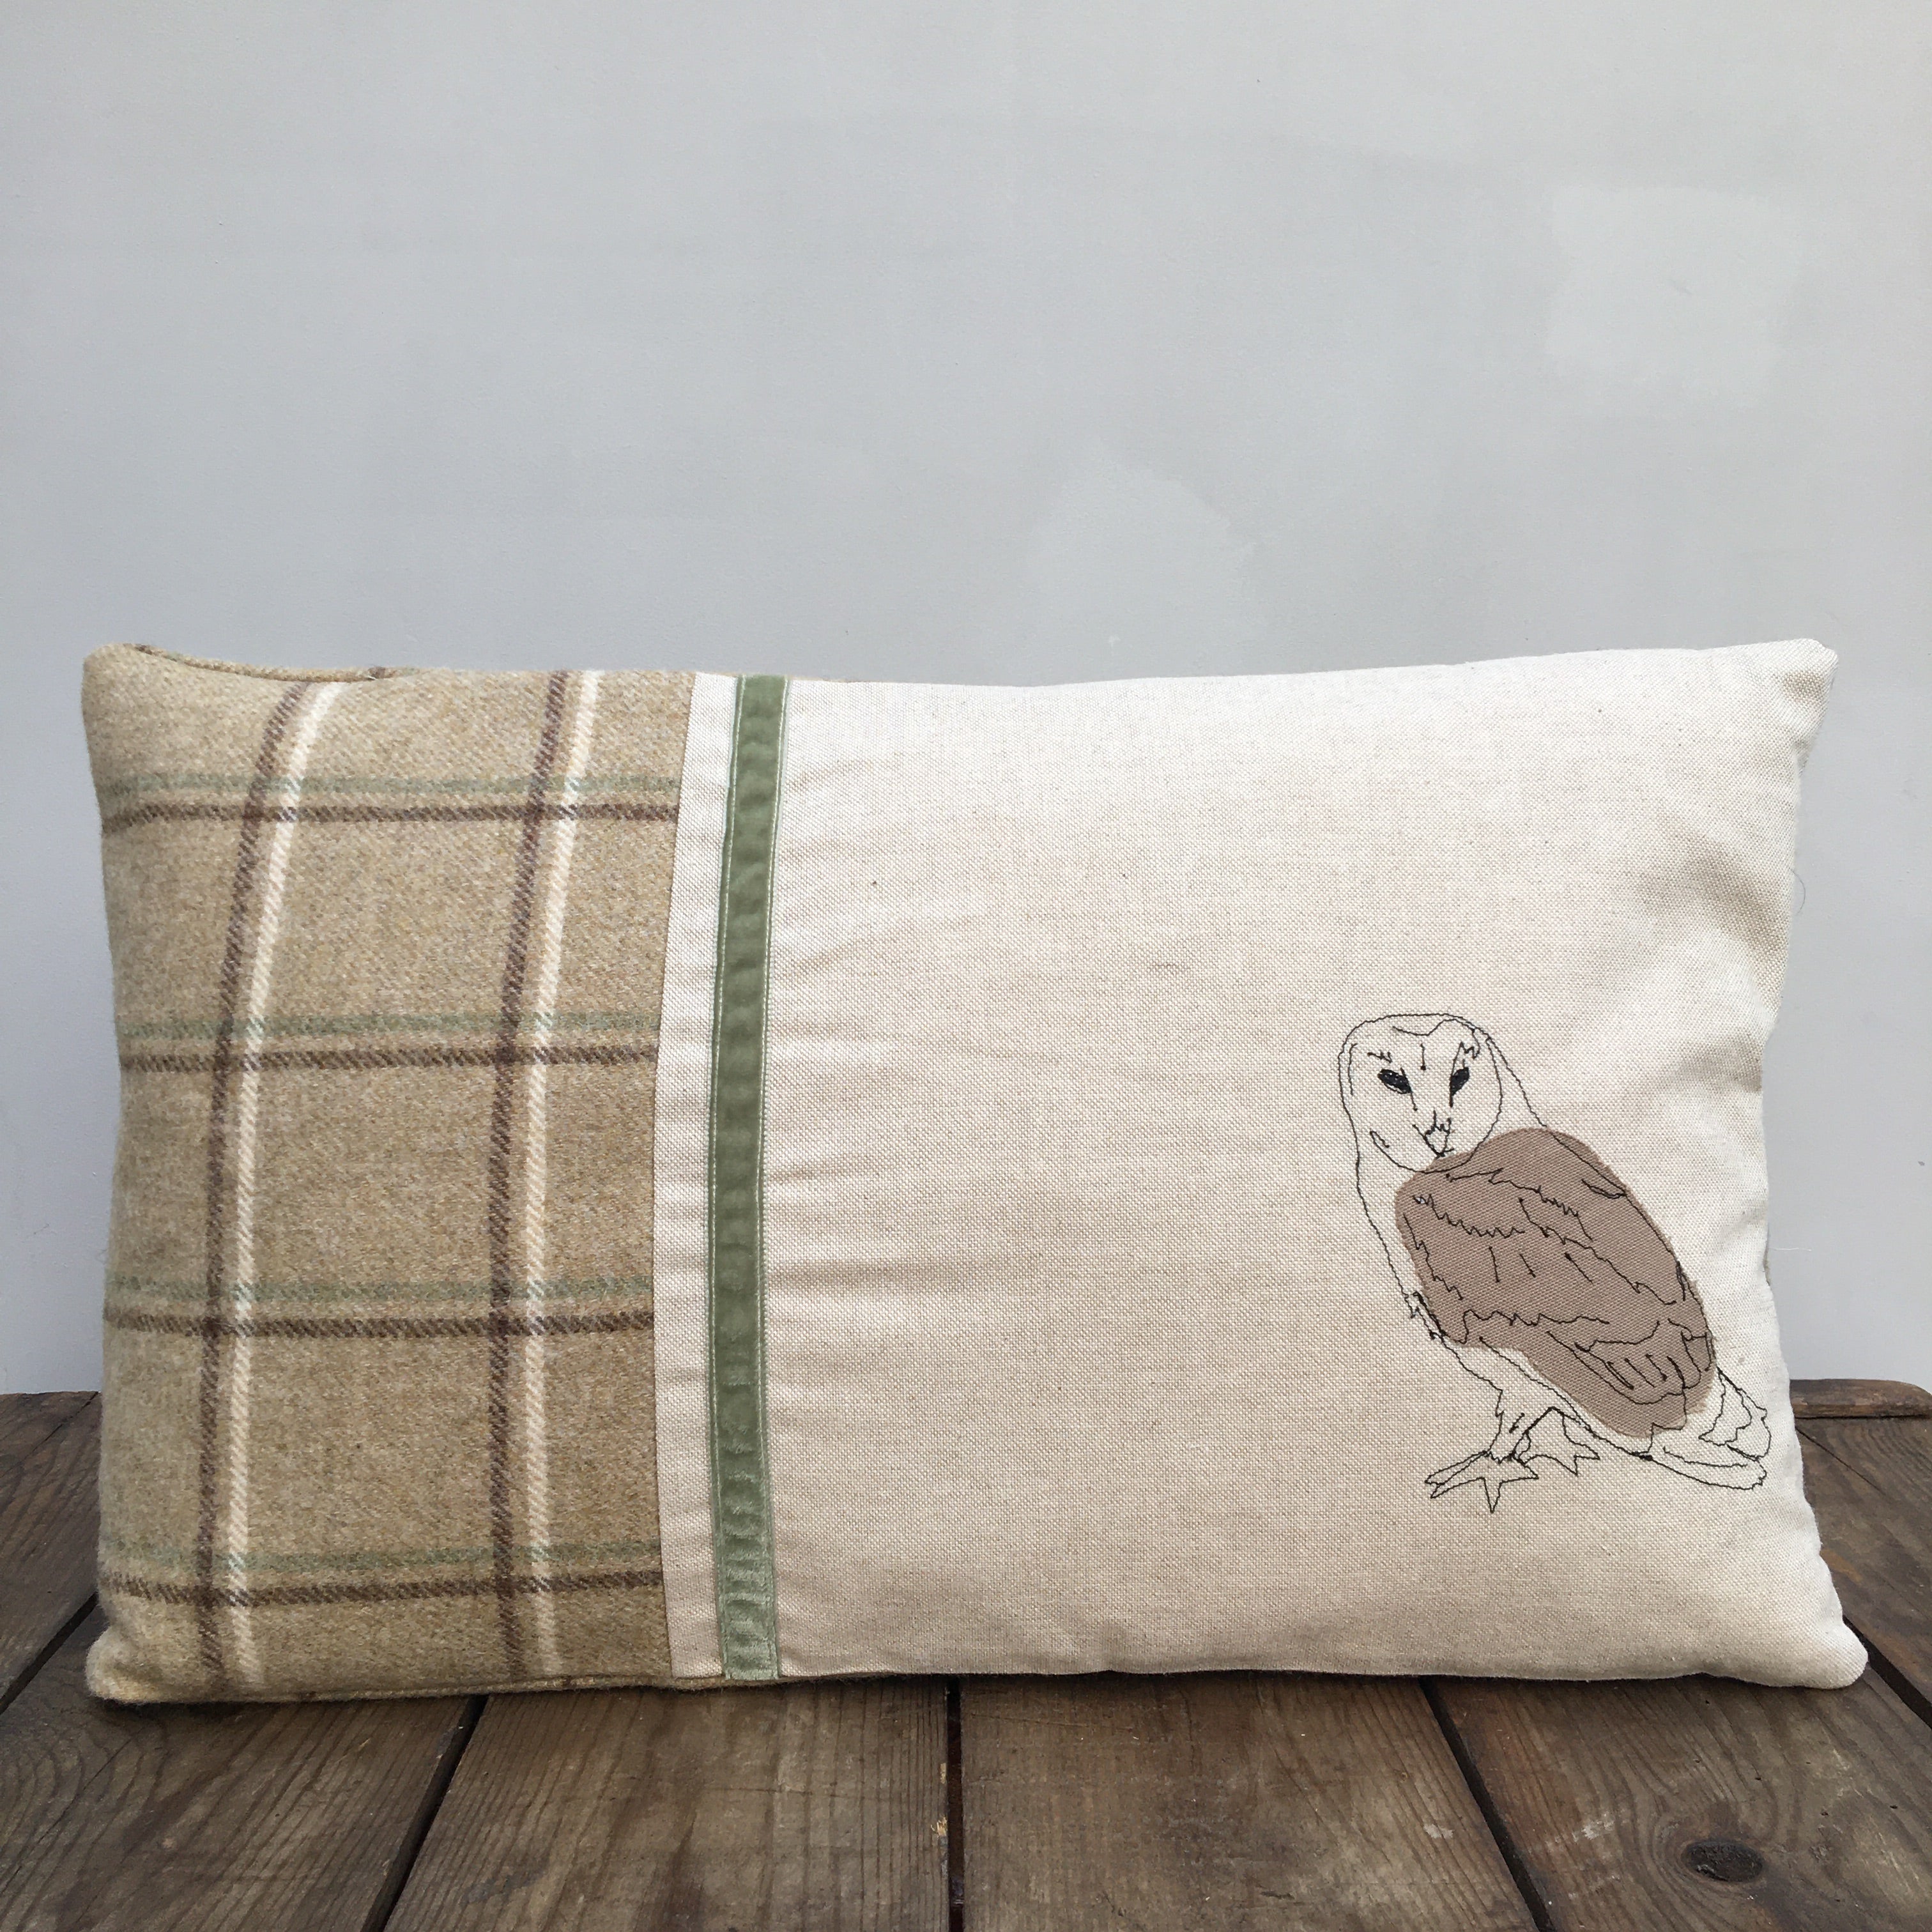 BARNY Owl Cushion